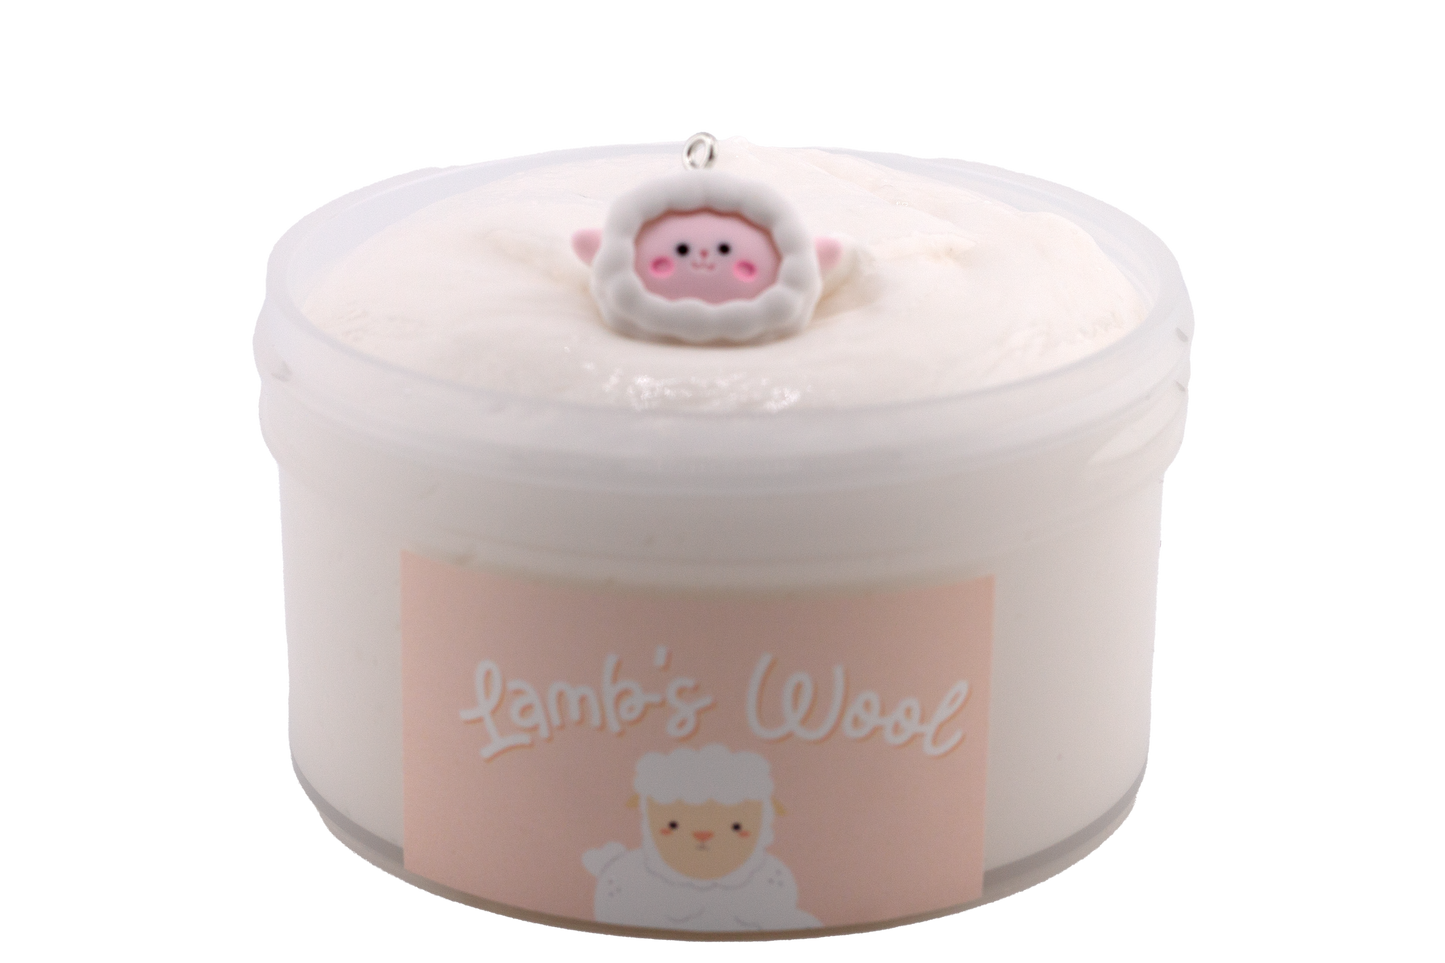 Lamb's Wool